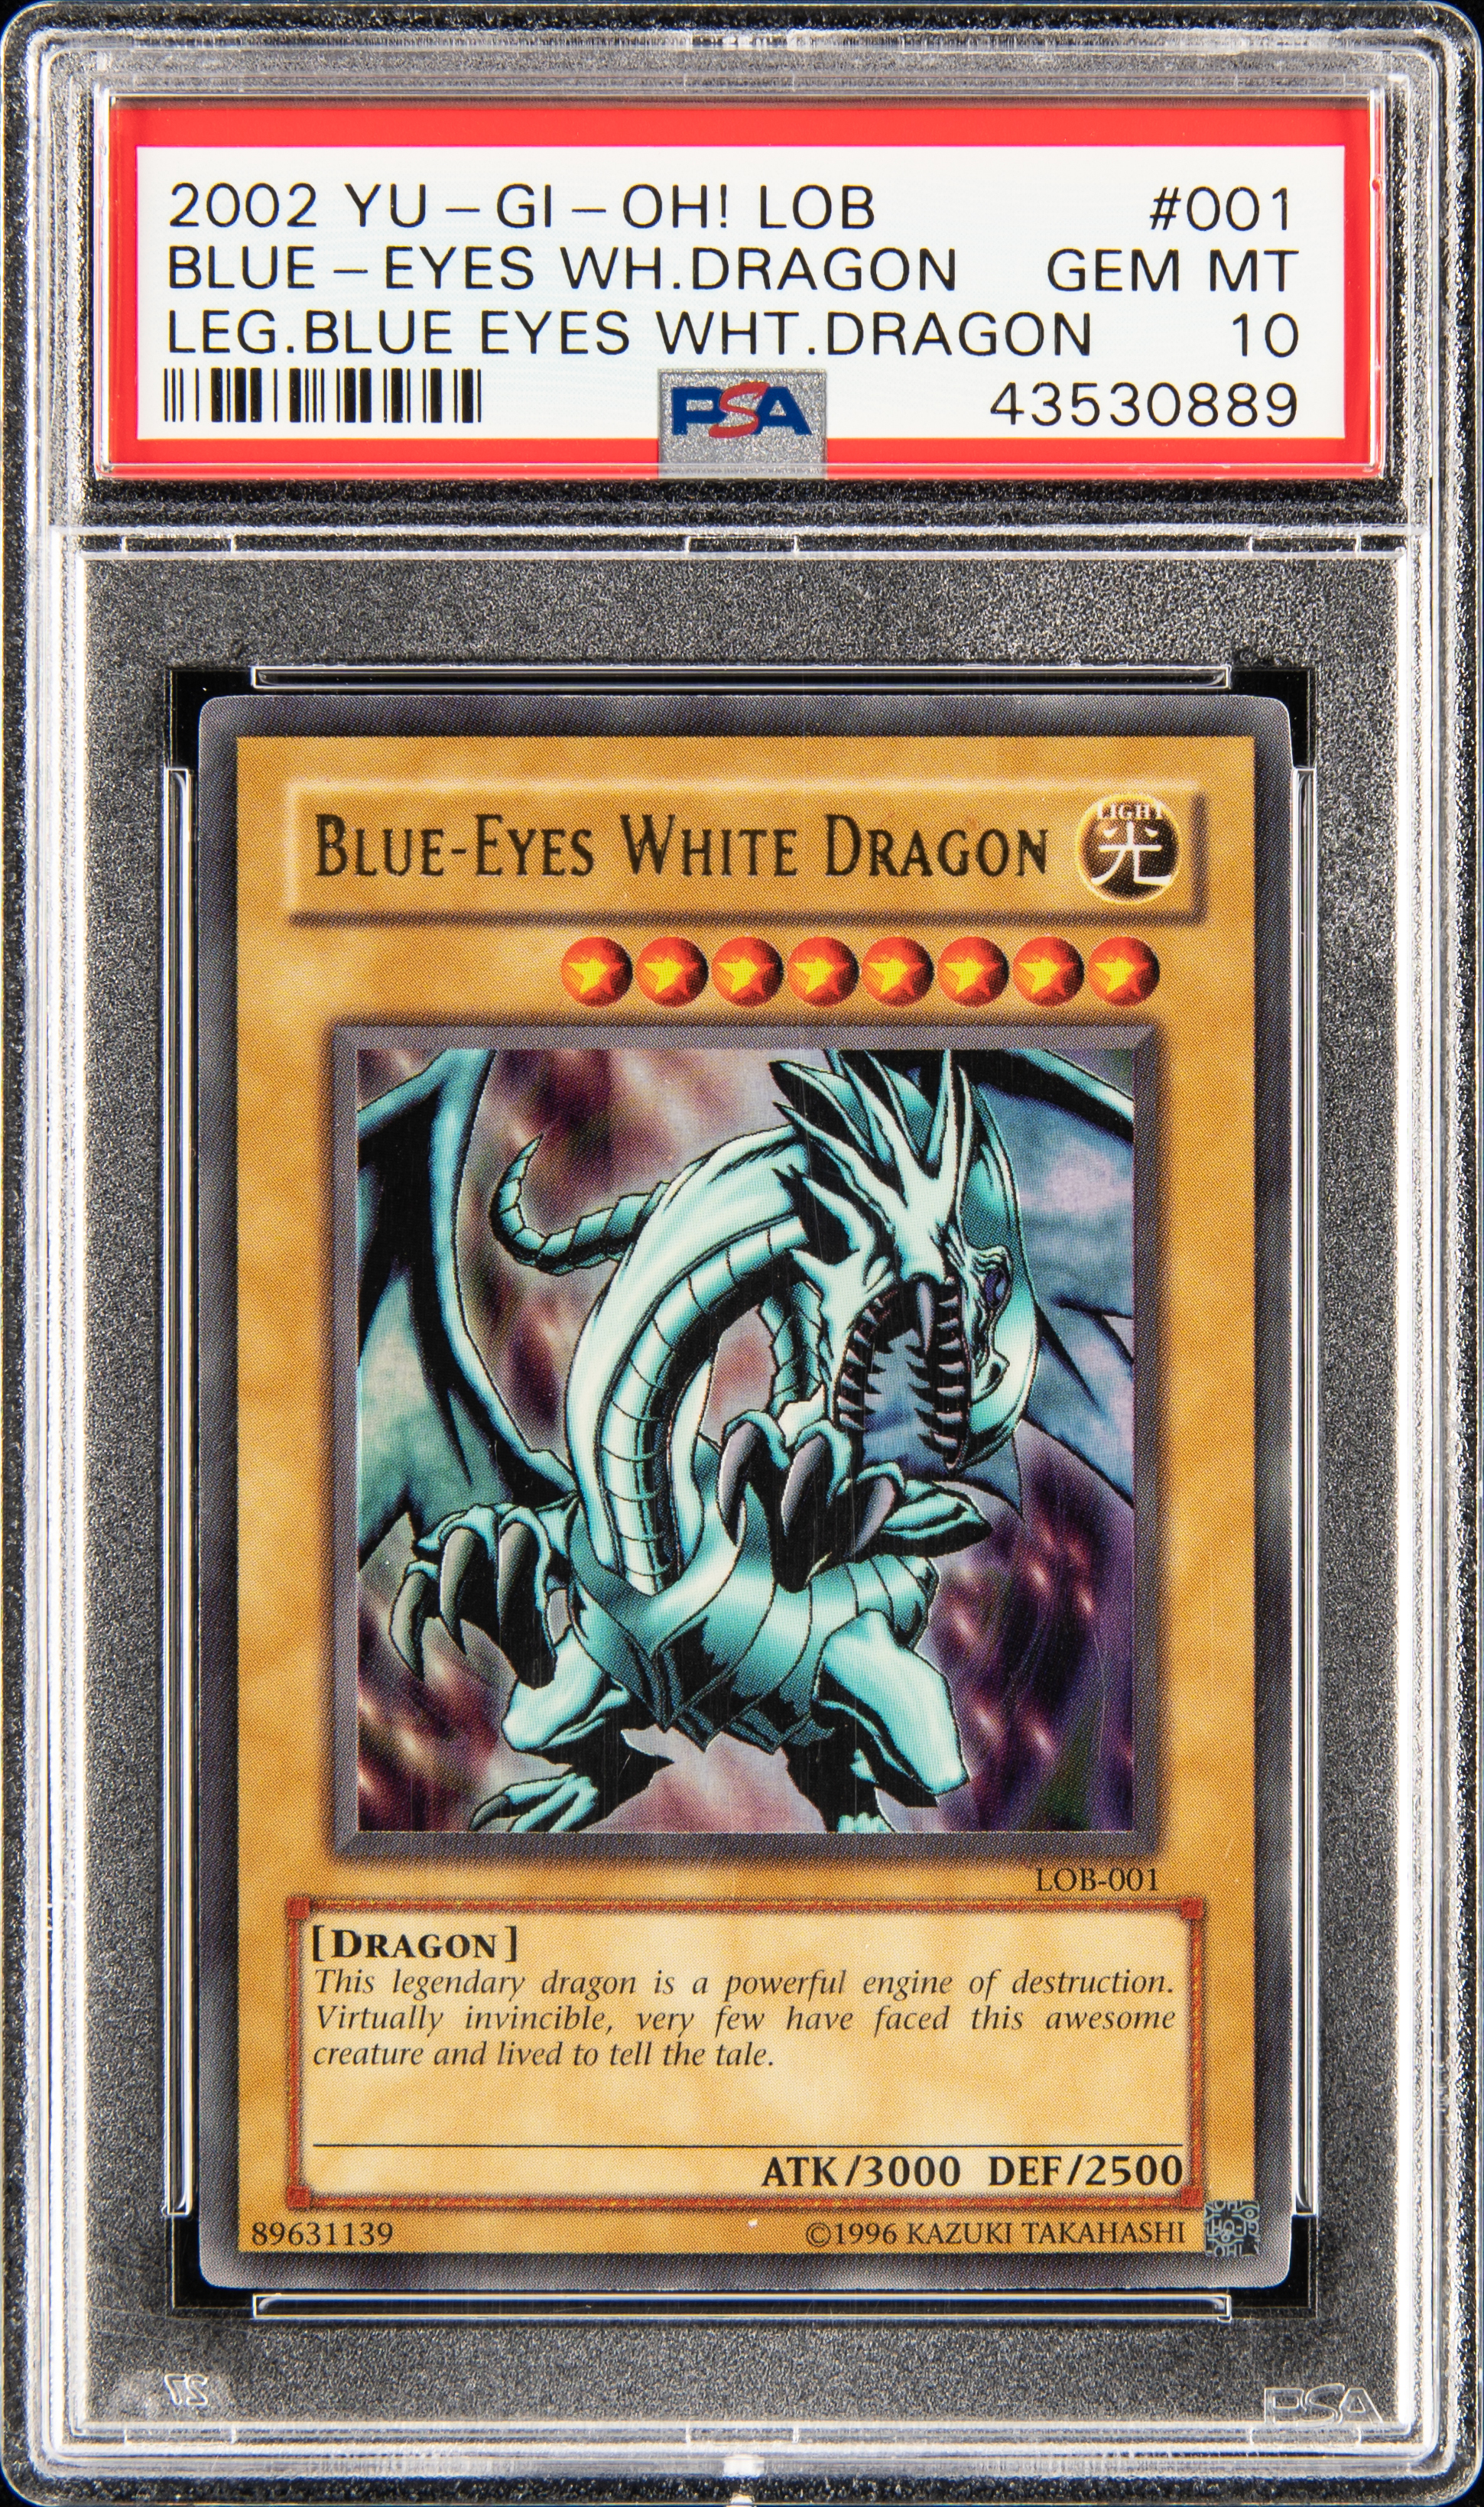 2002 Yu-Gi-Oh! Legend Of Blue Eyes White Dragon #001 Blue-Eyes White Dragon – PSA GEM MT 10